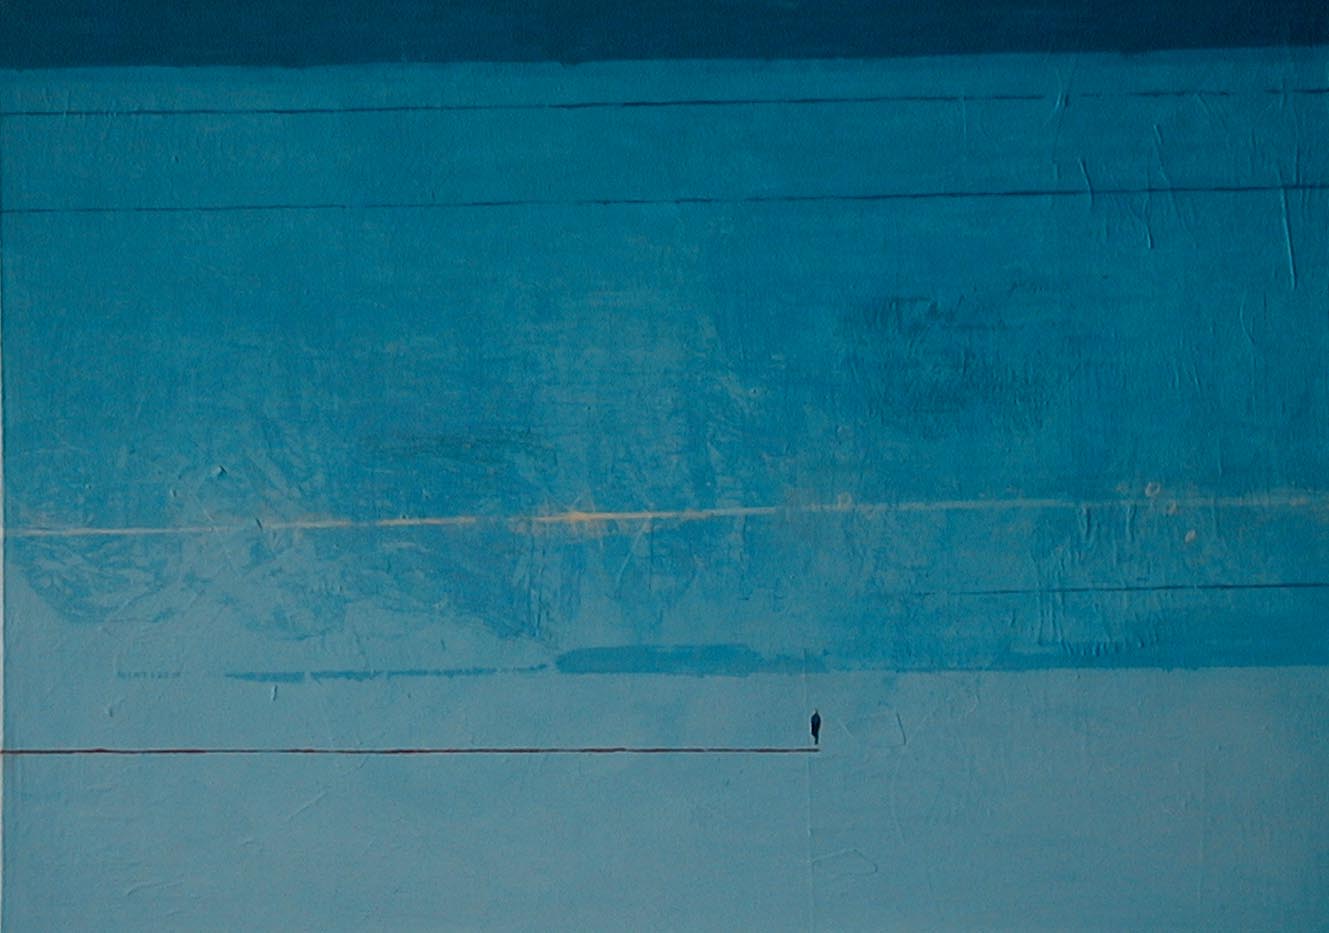 Mendrek Pawel 
"Life of the Horizon 13 Uhr 30", 2002
Acryl / Leinwand
100 x 140 cm